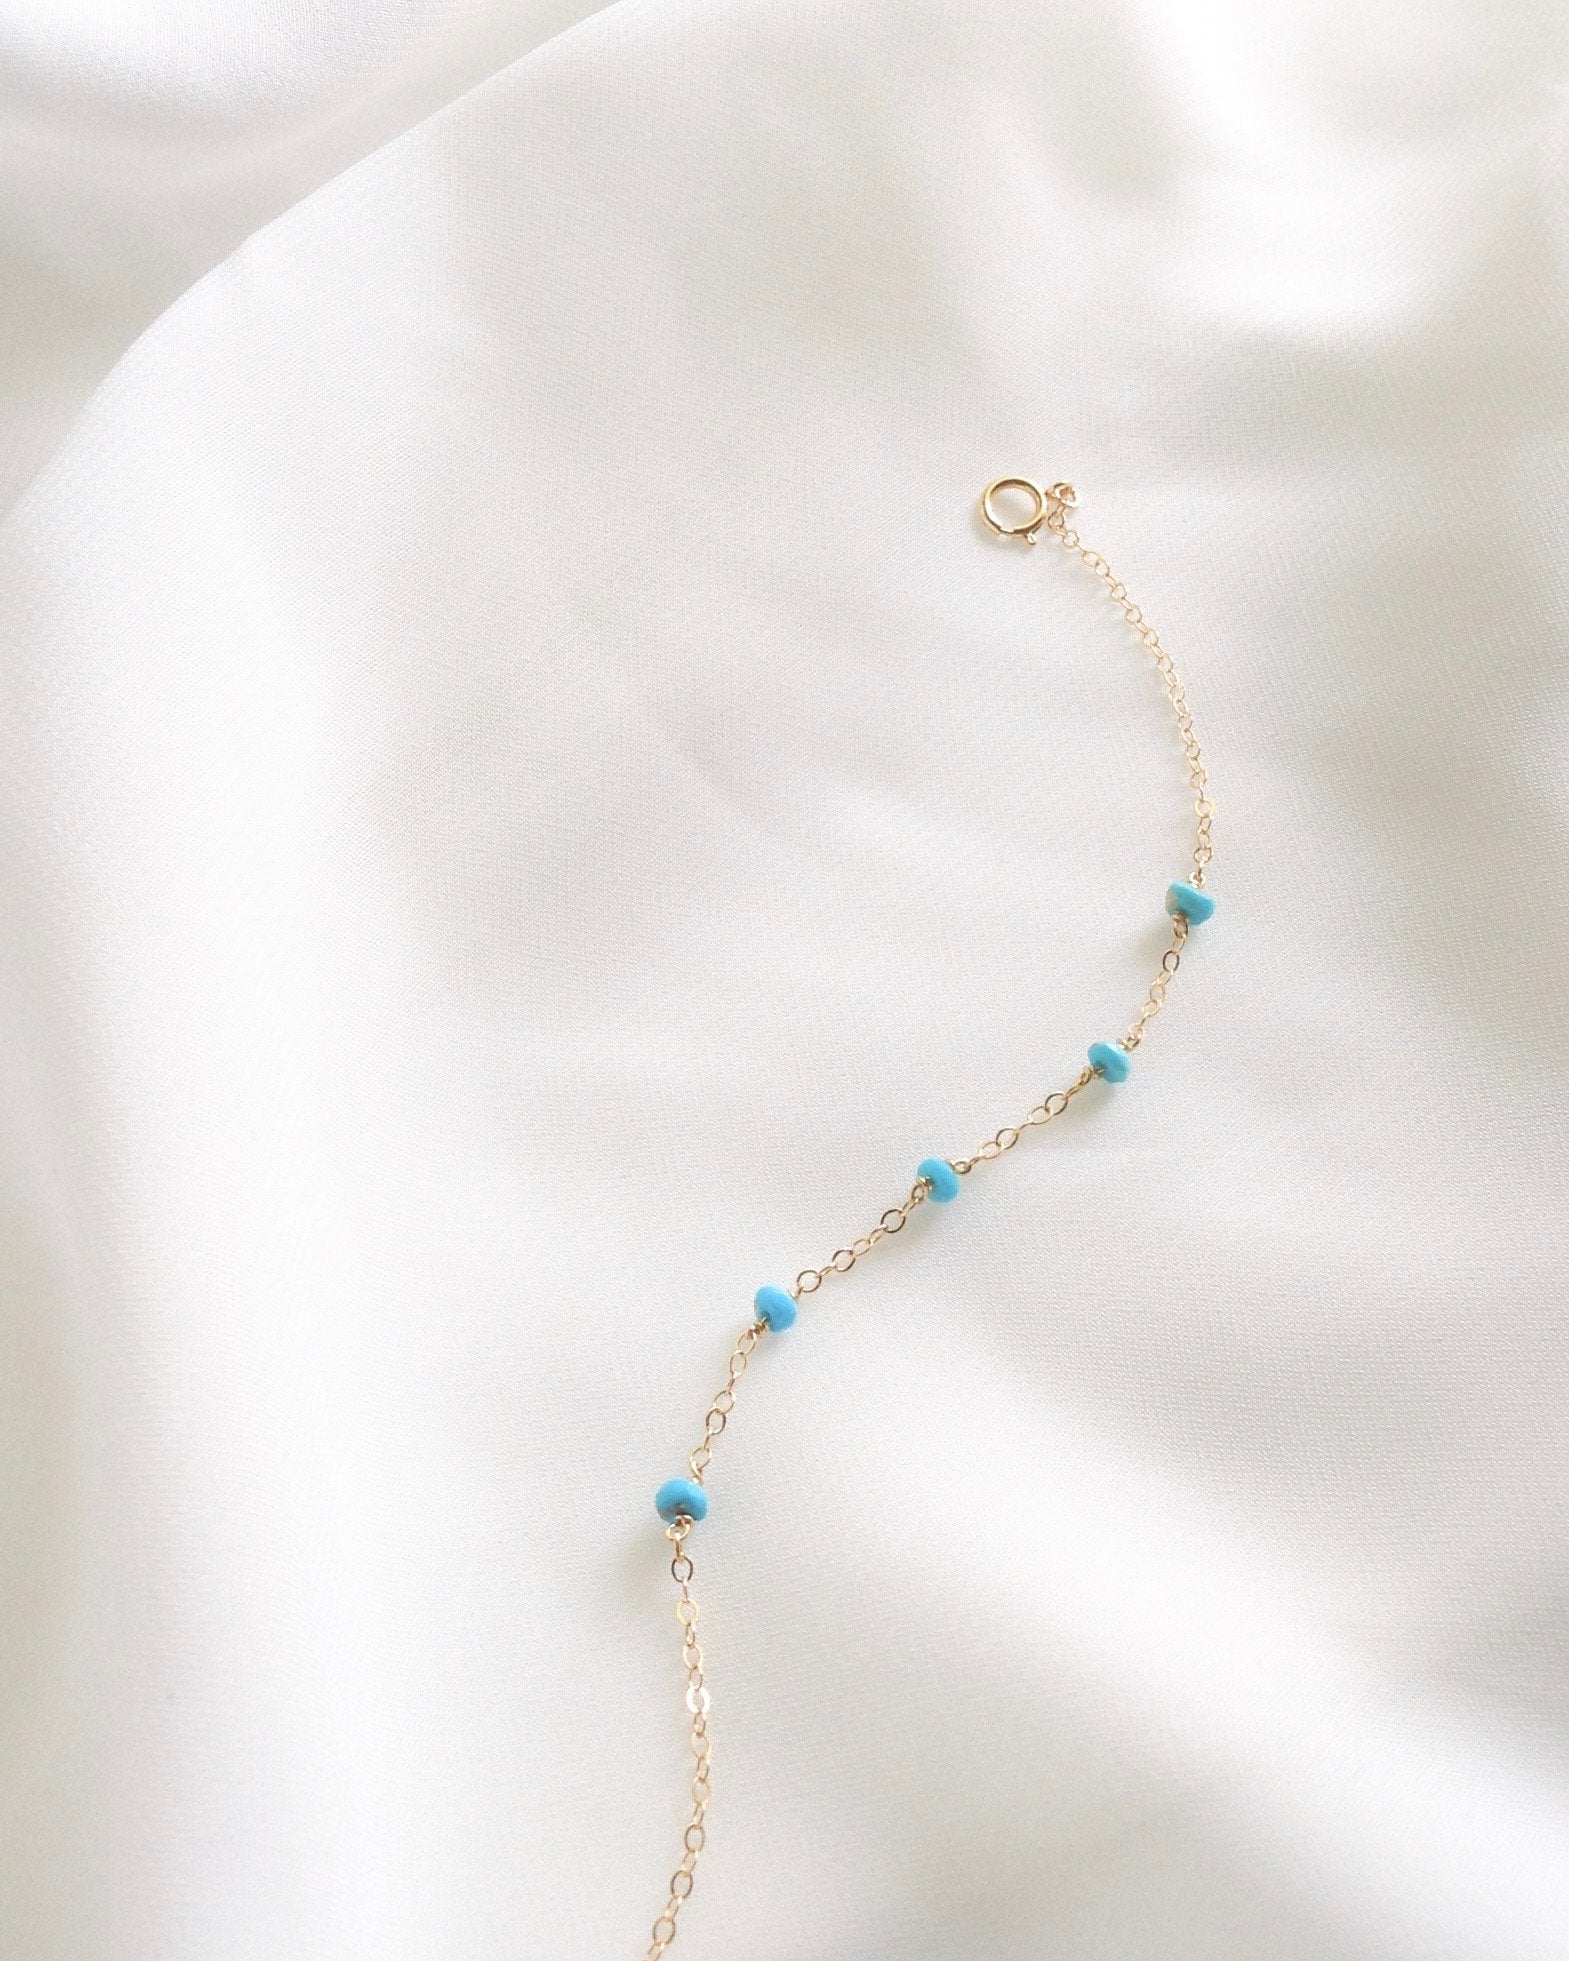 Sleeping Beauty Turquoise Dainty Chain Bracelet | Delicate Everyday Bracelet | IB Jewelry